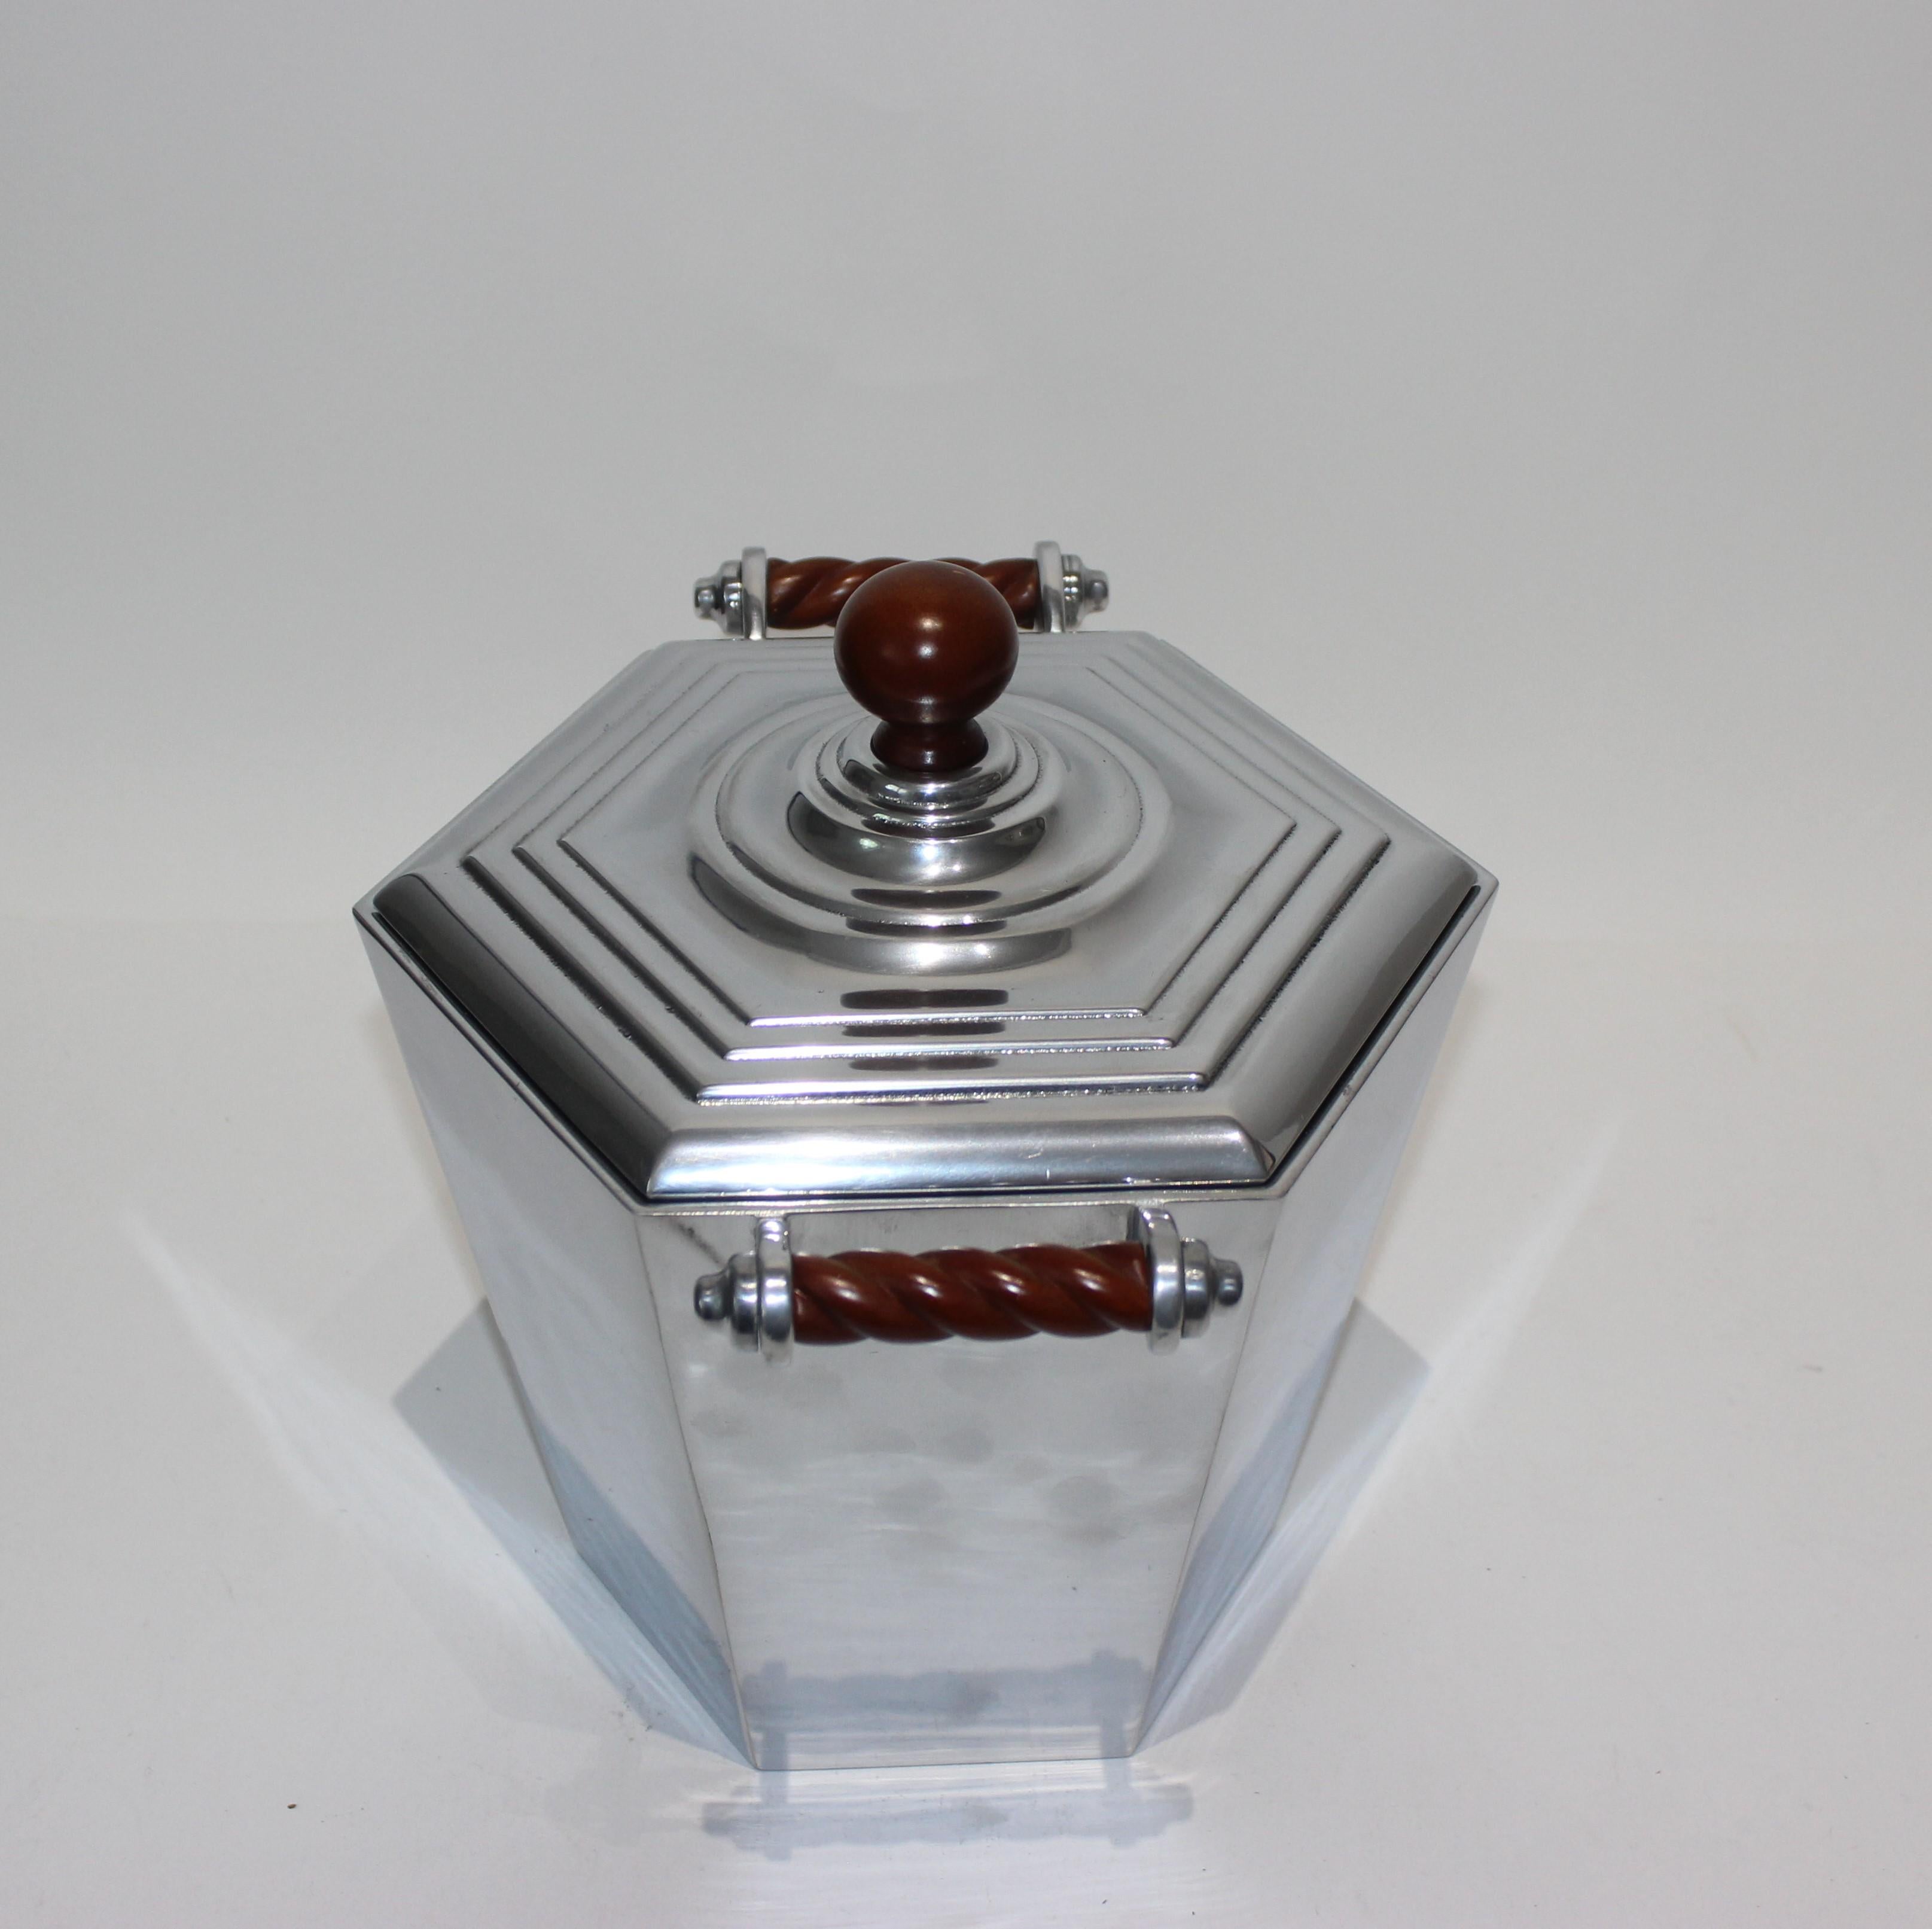 Carved Reed & Barton Art Deco Style Aluminum Ice Bucket